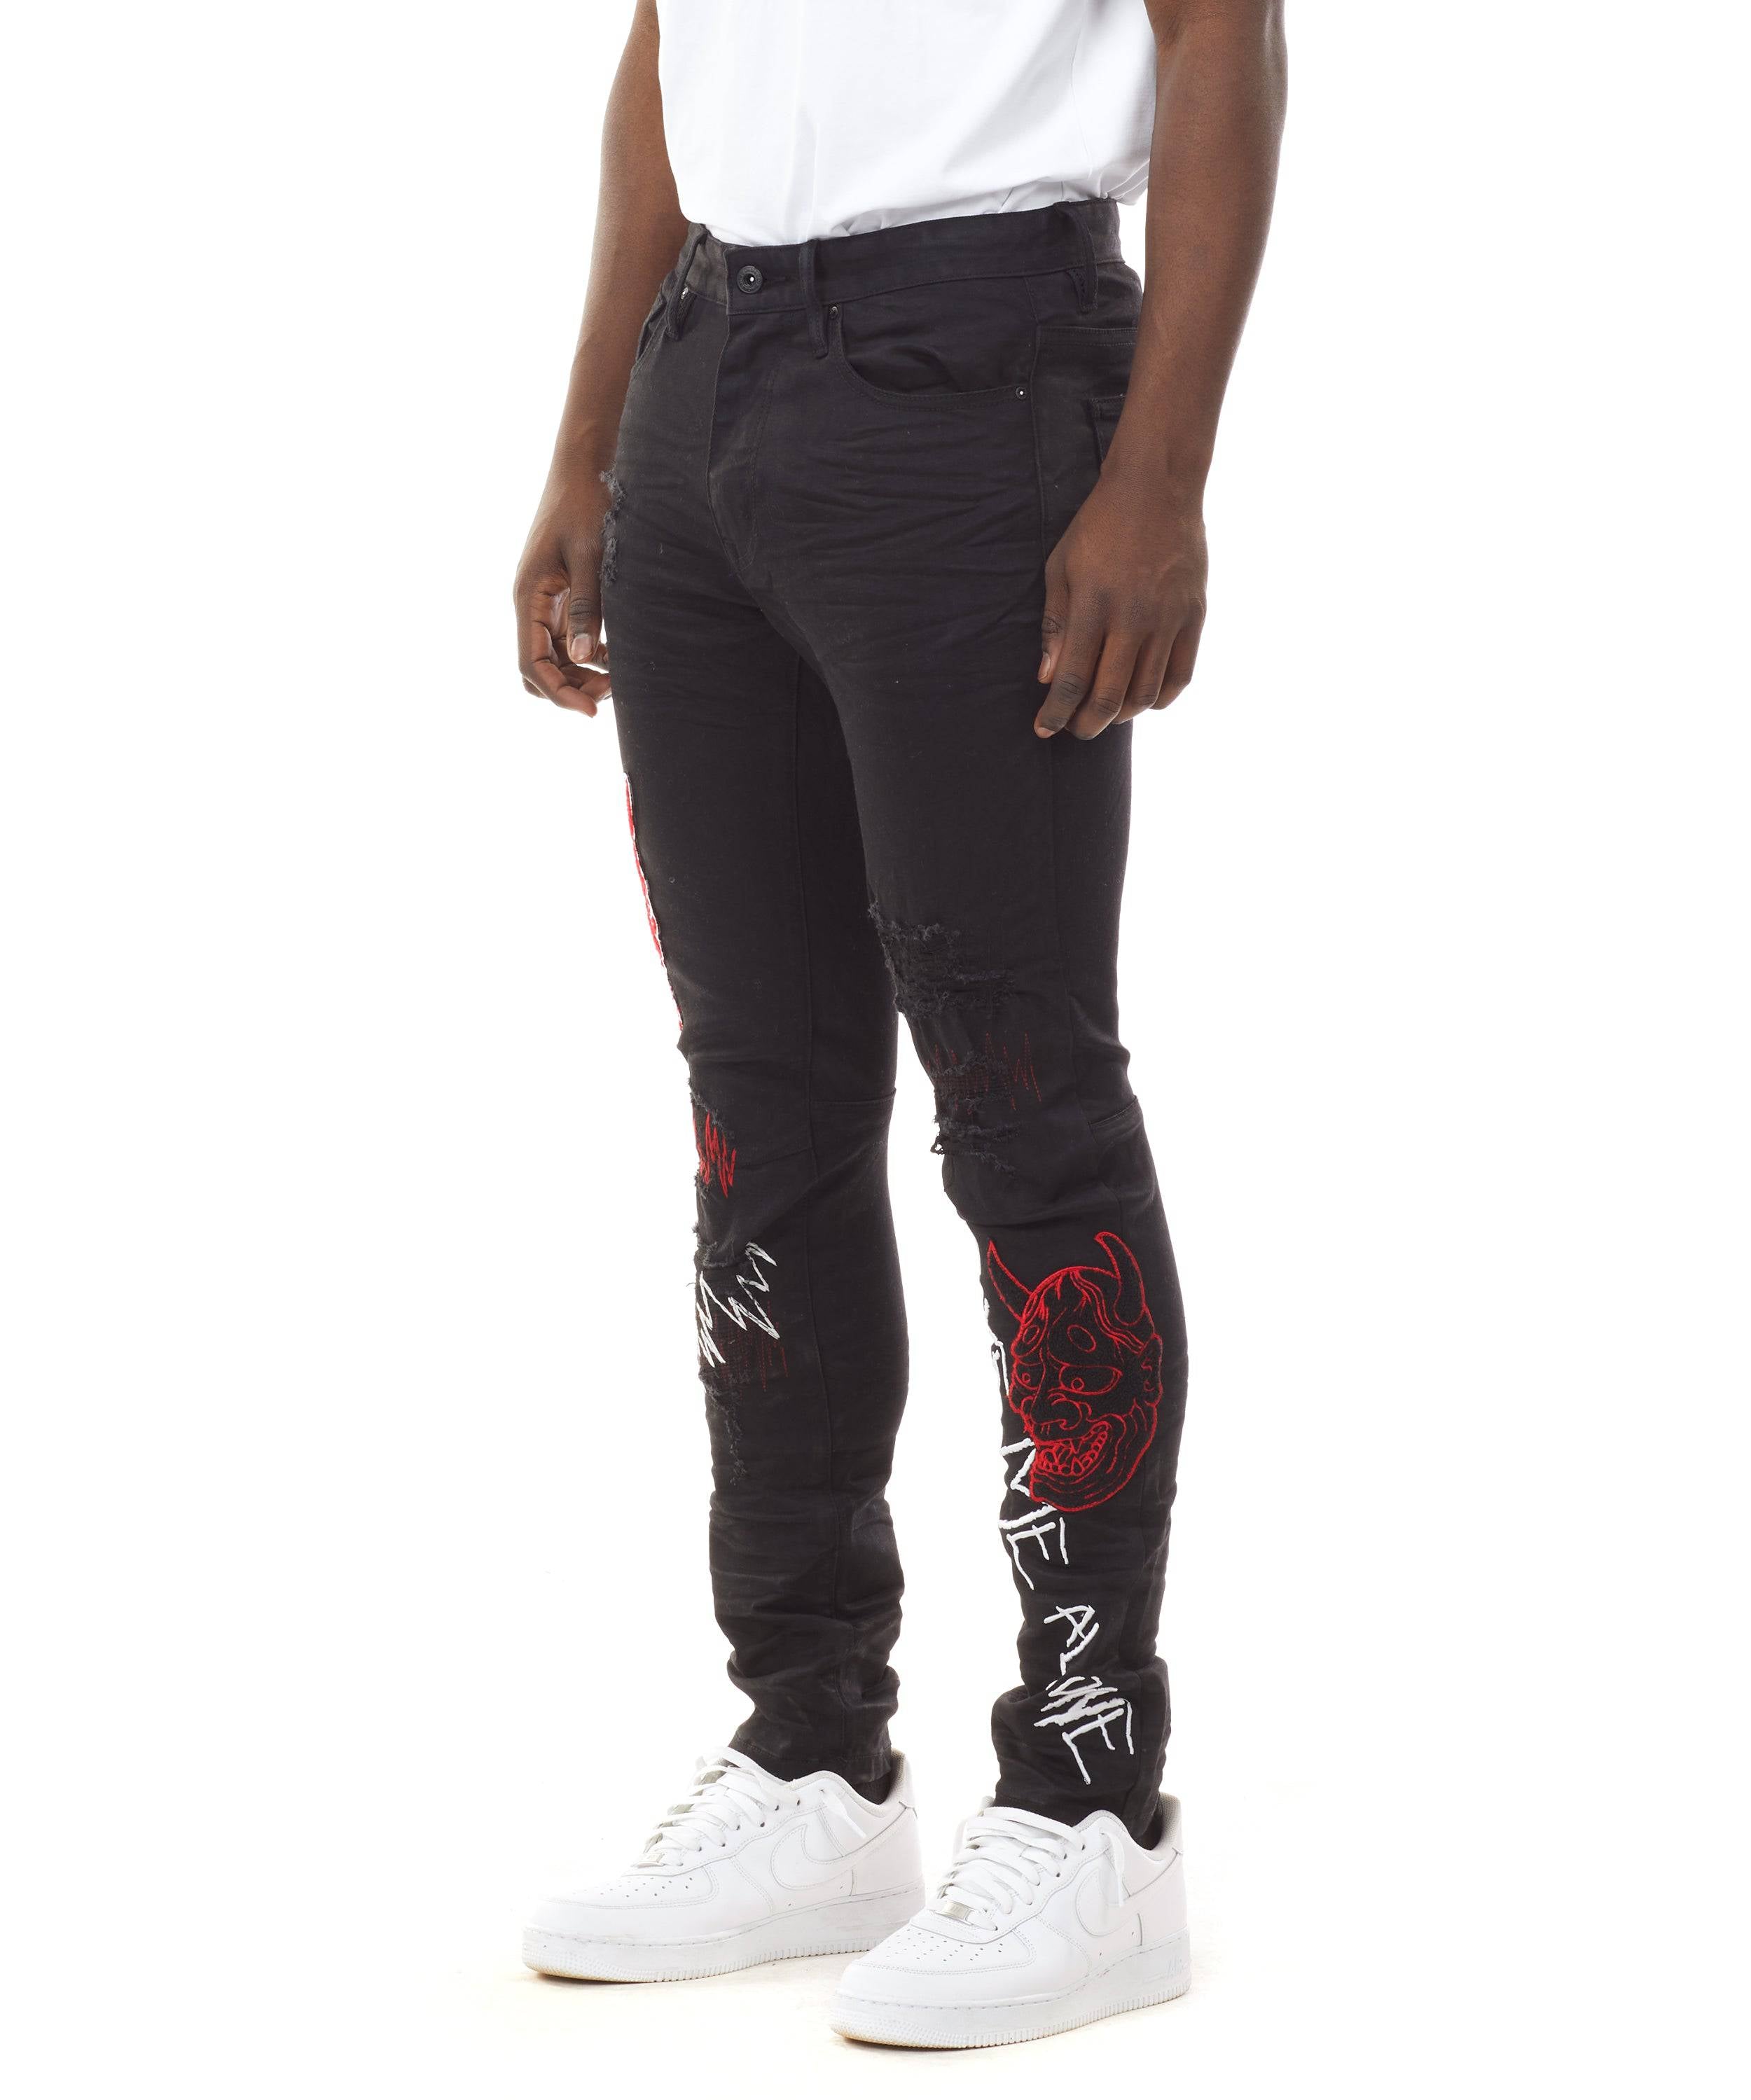 Dokkaebi Fashion Jeans - Jet Black - Smoke Rise